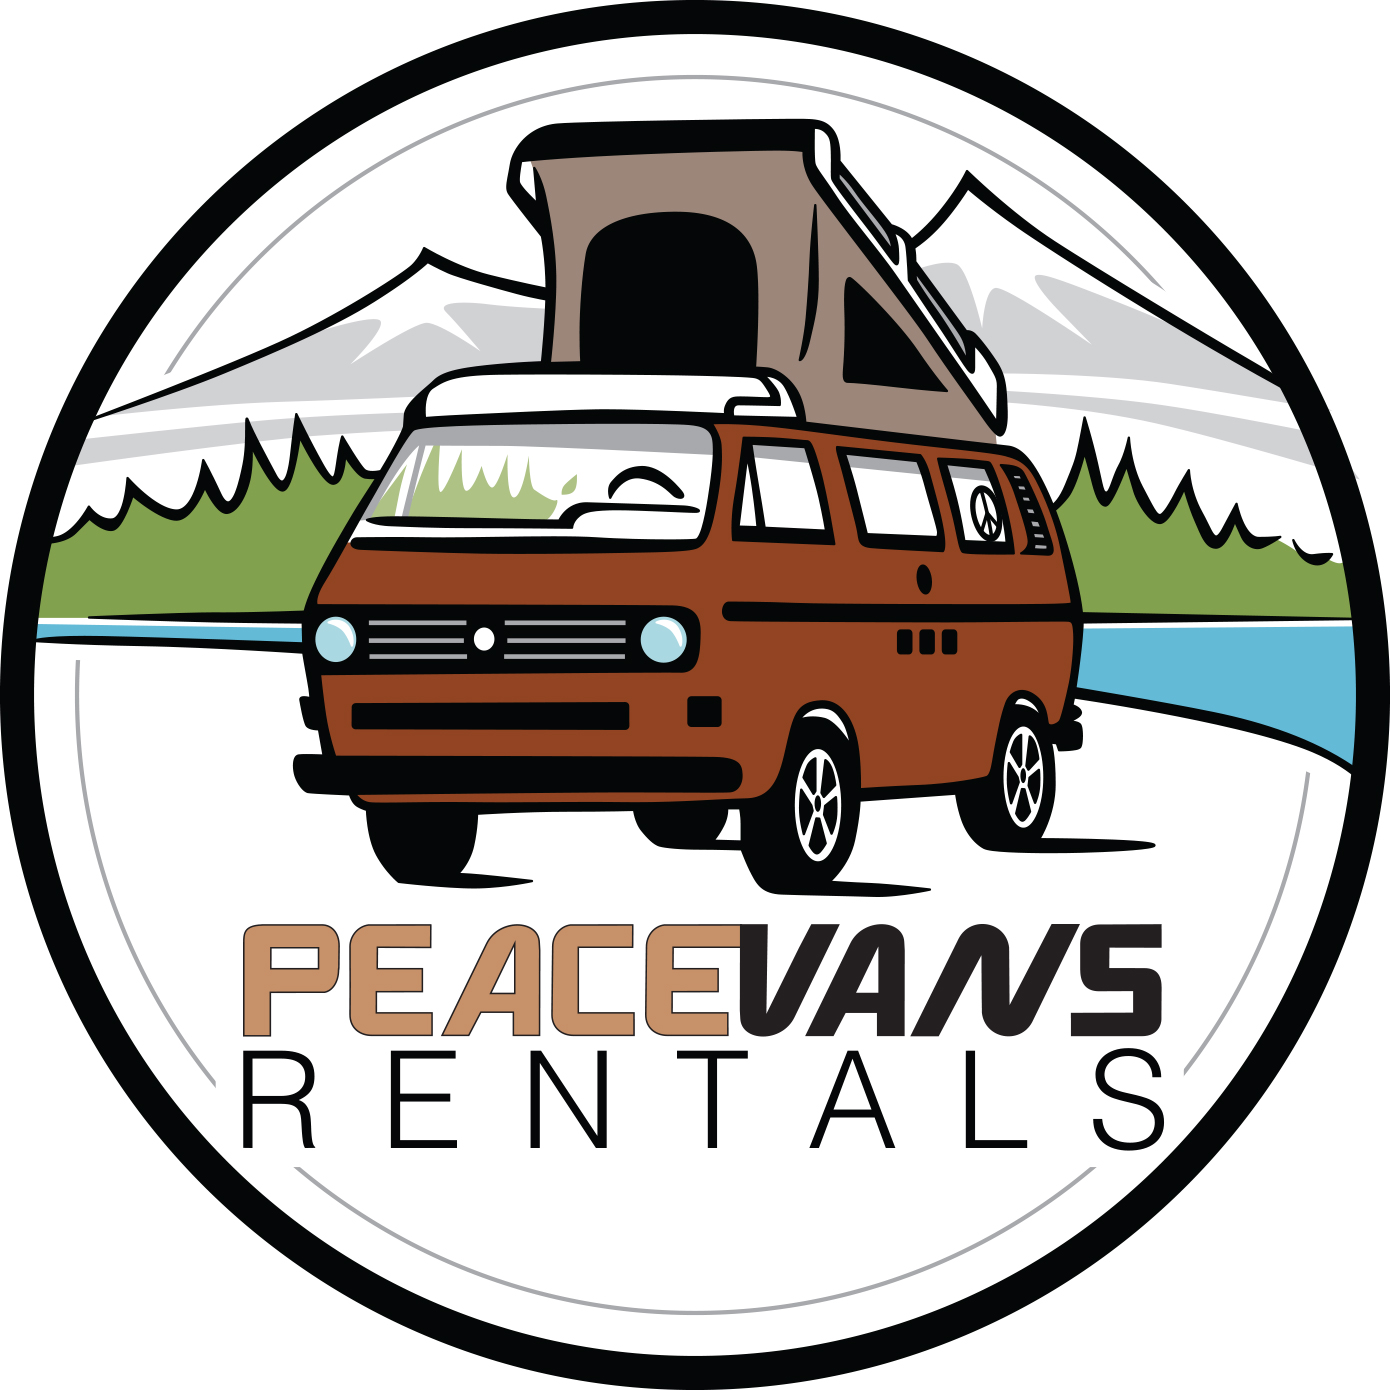 peace-vans-rentals-circle.jpg